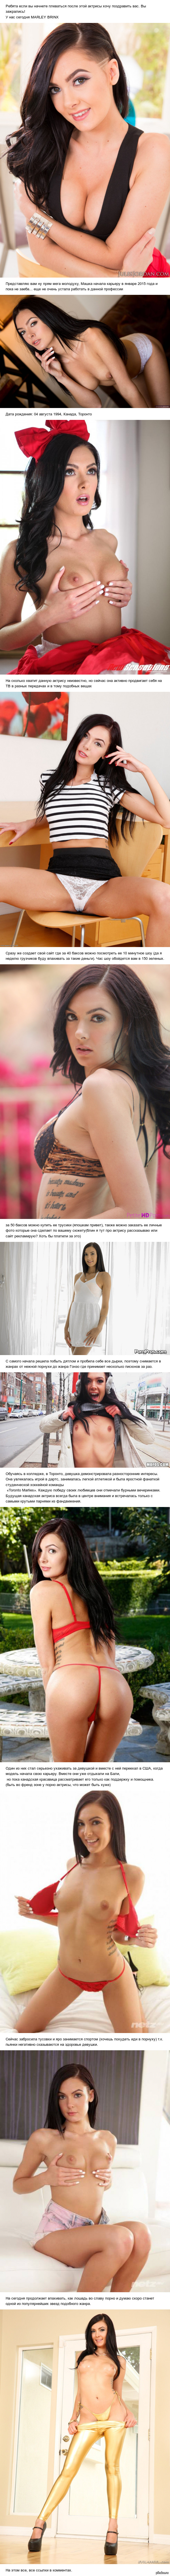 MARLEY BRINX - model of the erotic genre - NSFW, My, Longpost, Masturbation, Porn, Girls, Erotic